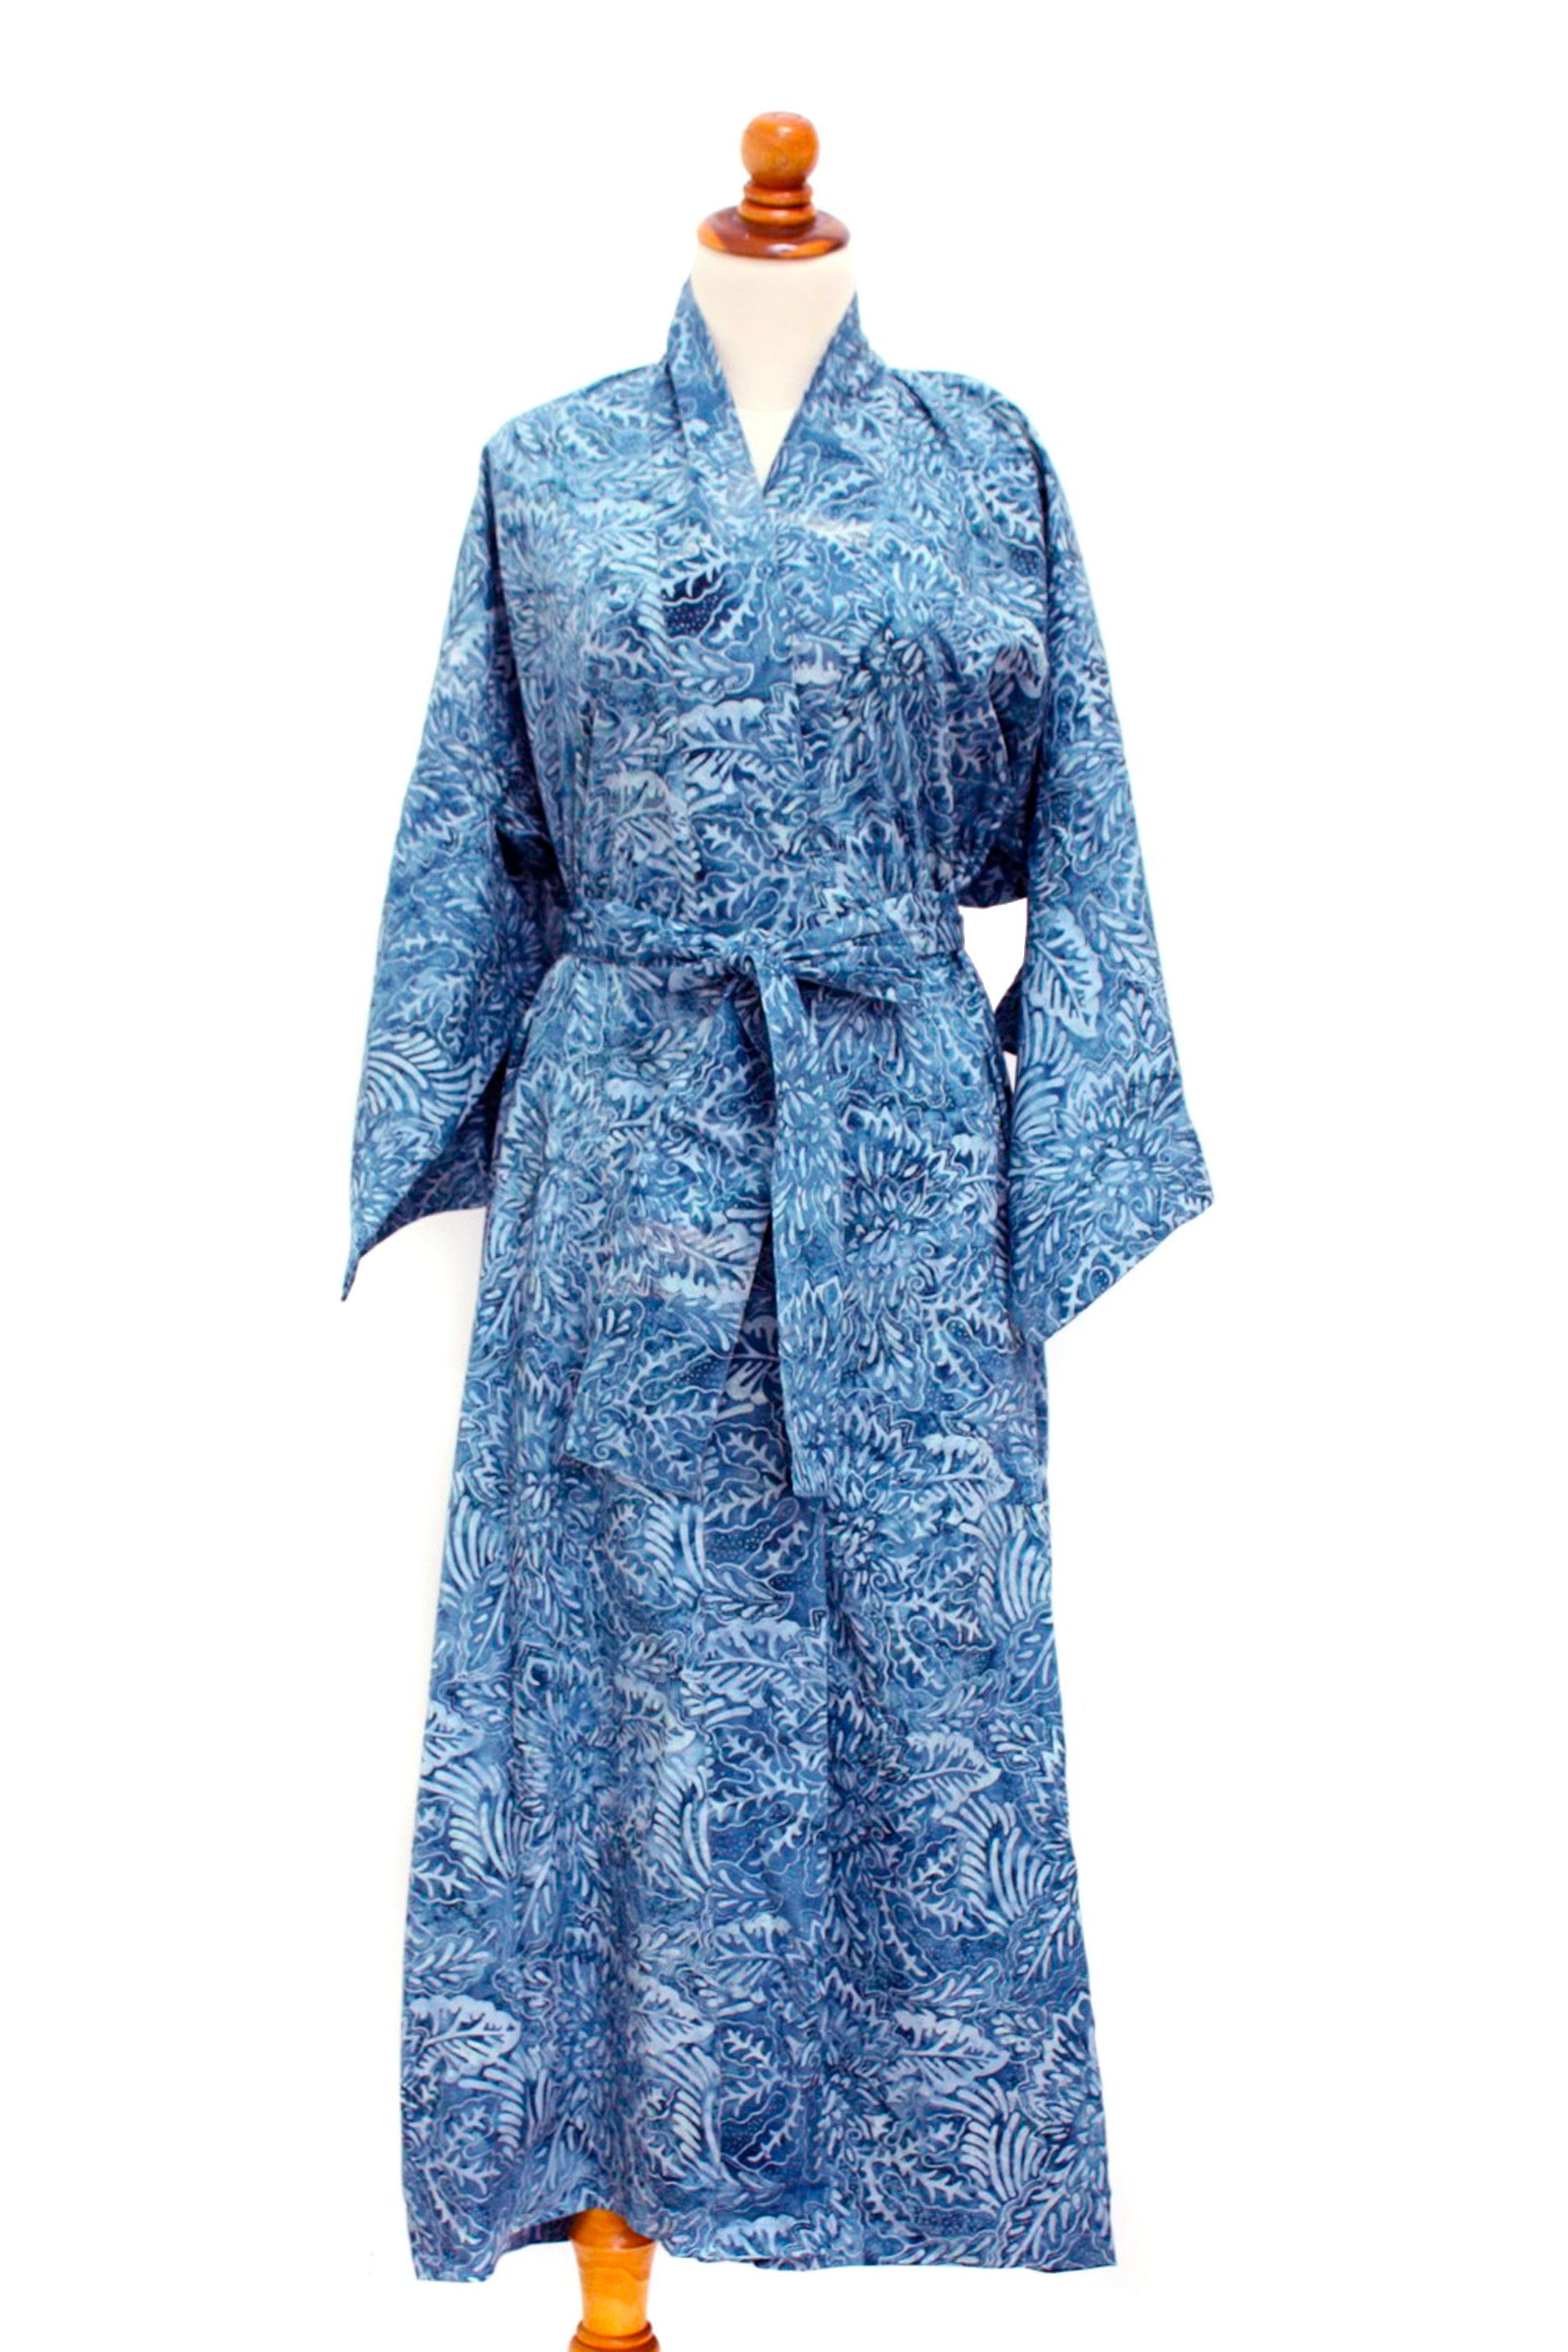 Artisan Crafted Long Batik Cotton Robe for Women - Blue Forest | NOVICA